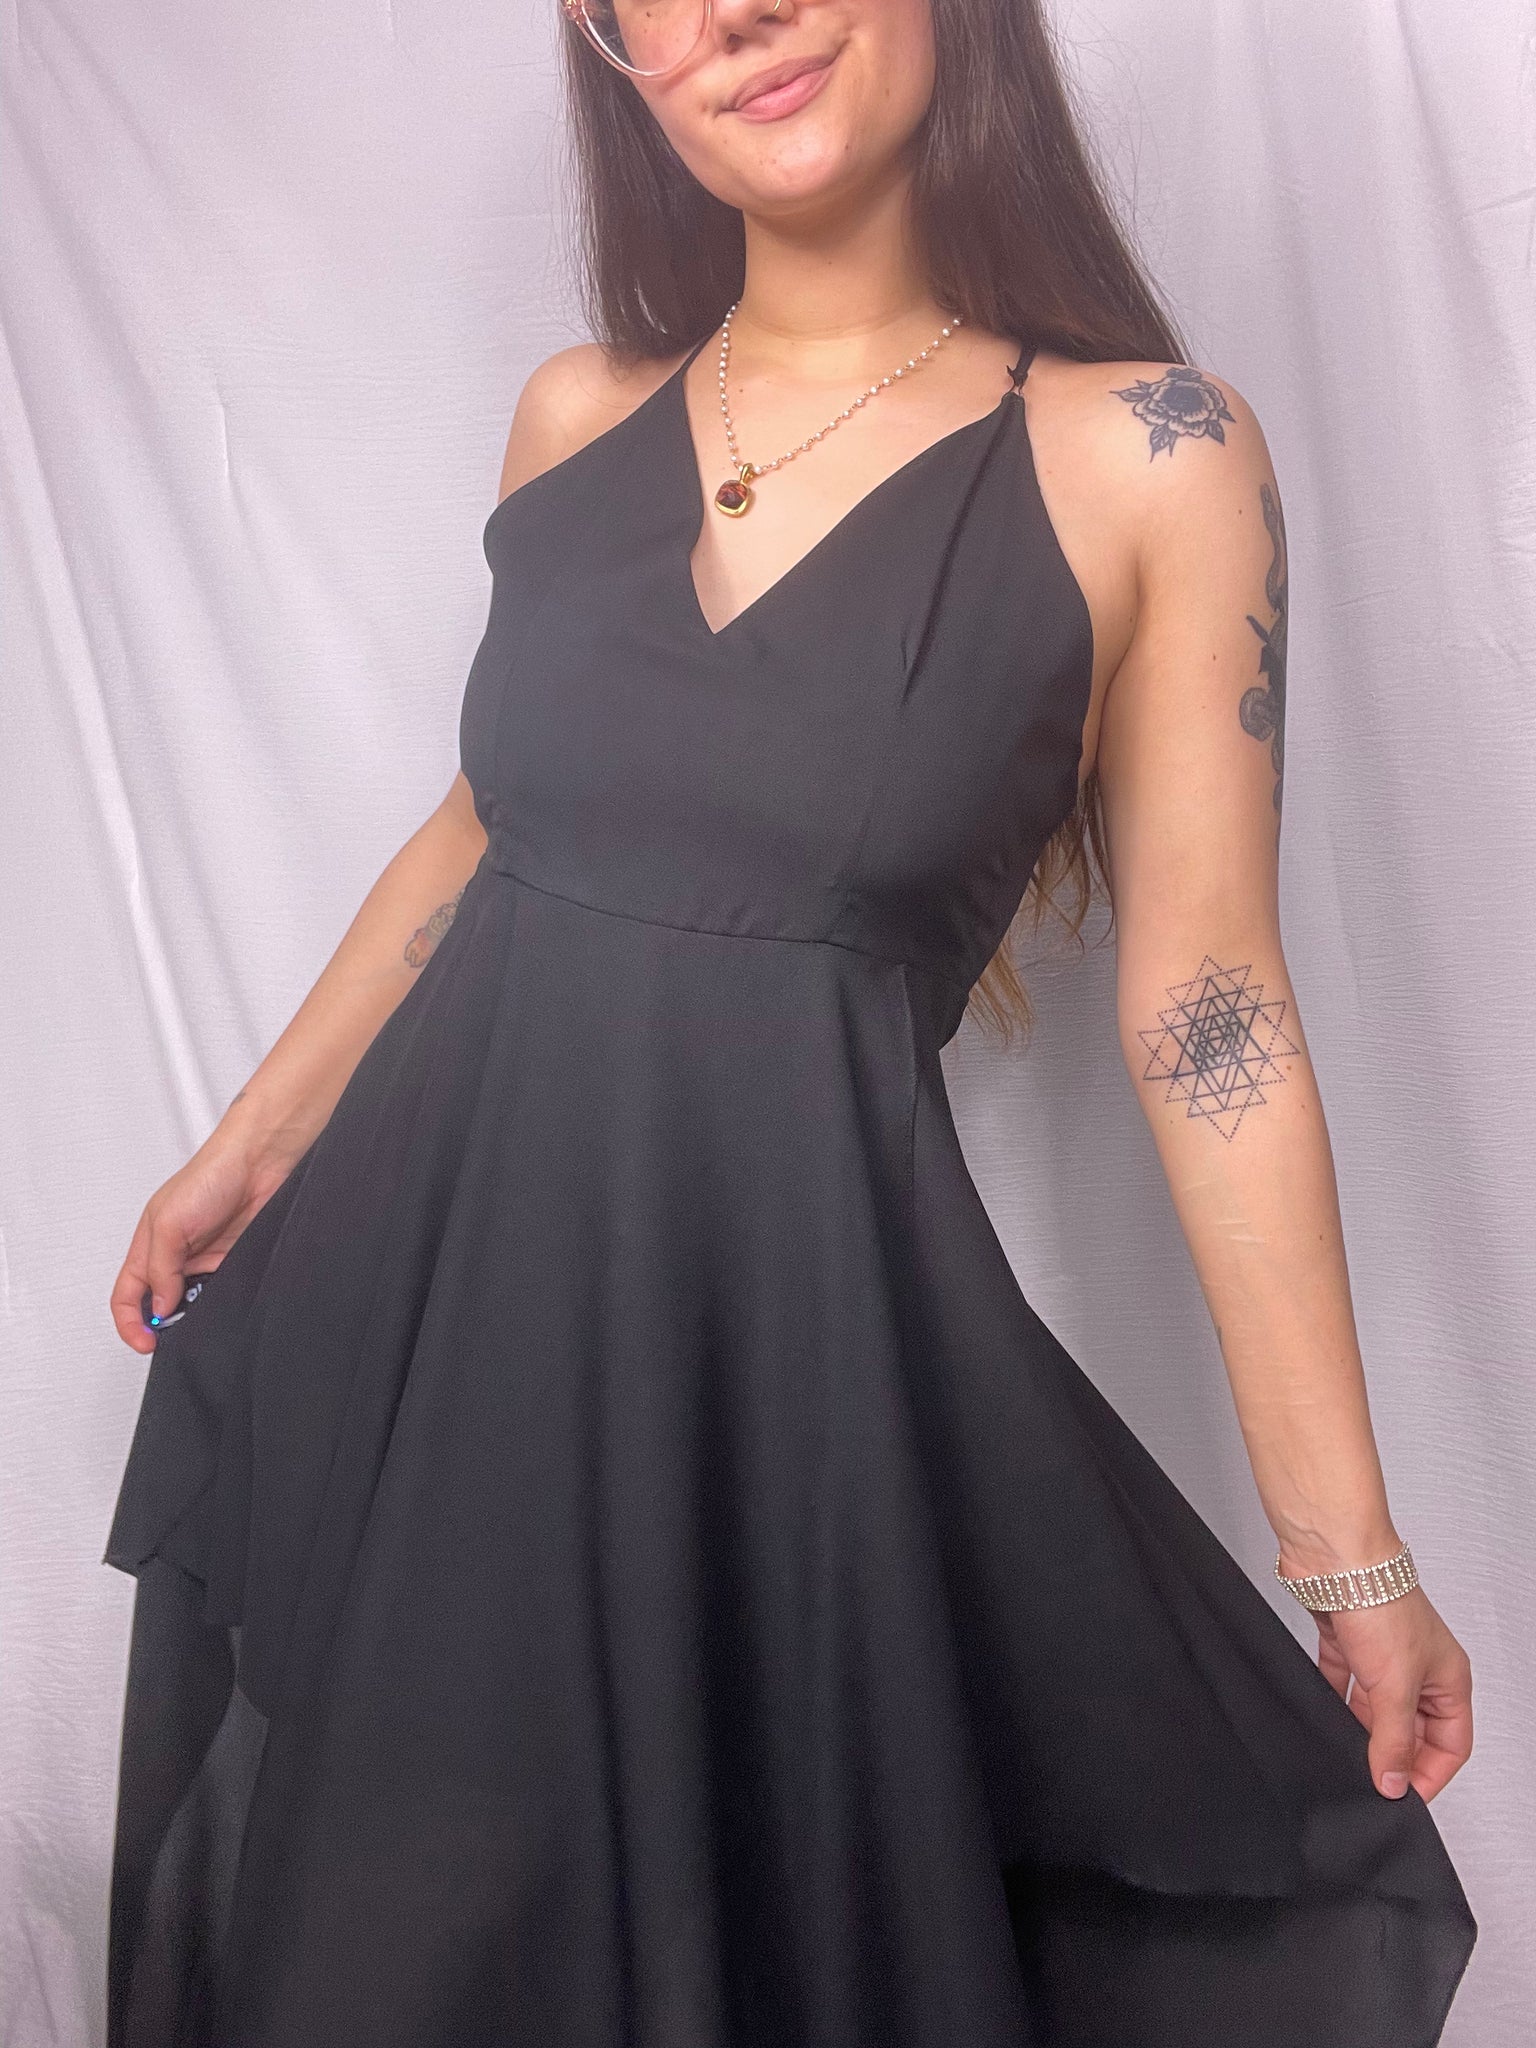 NEW 90s high low black dress, Size XS